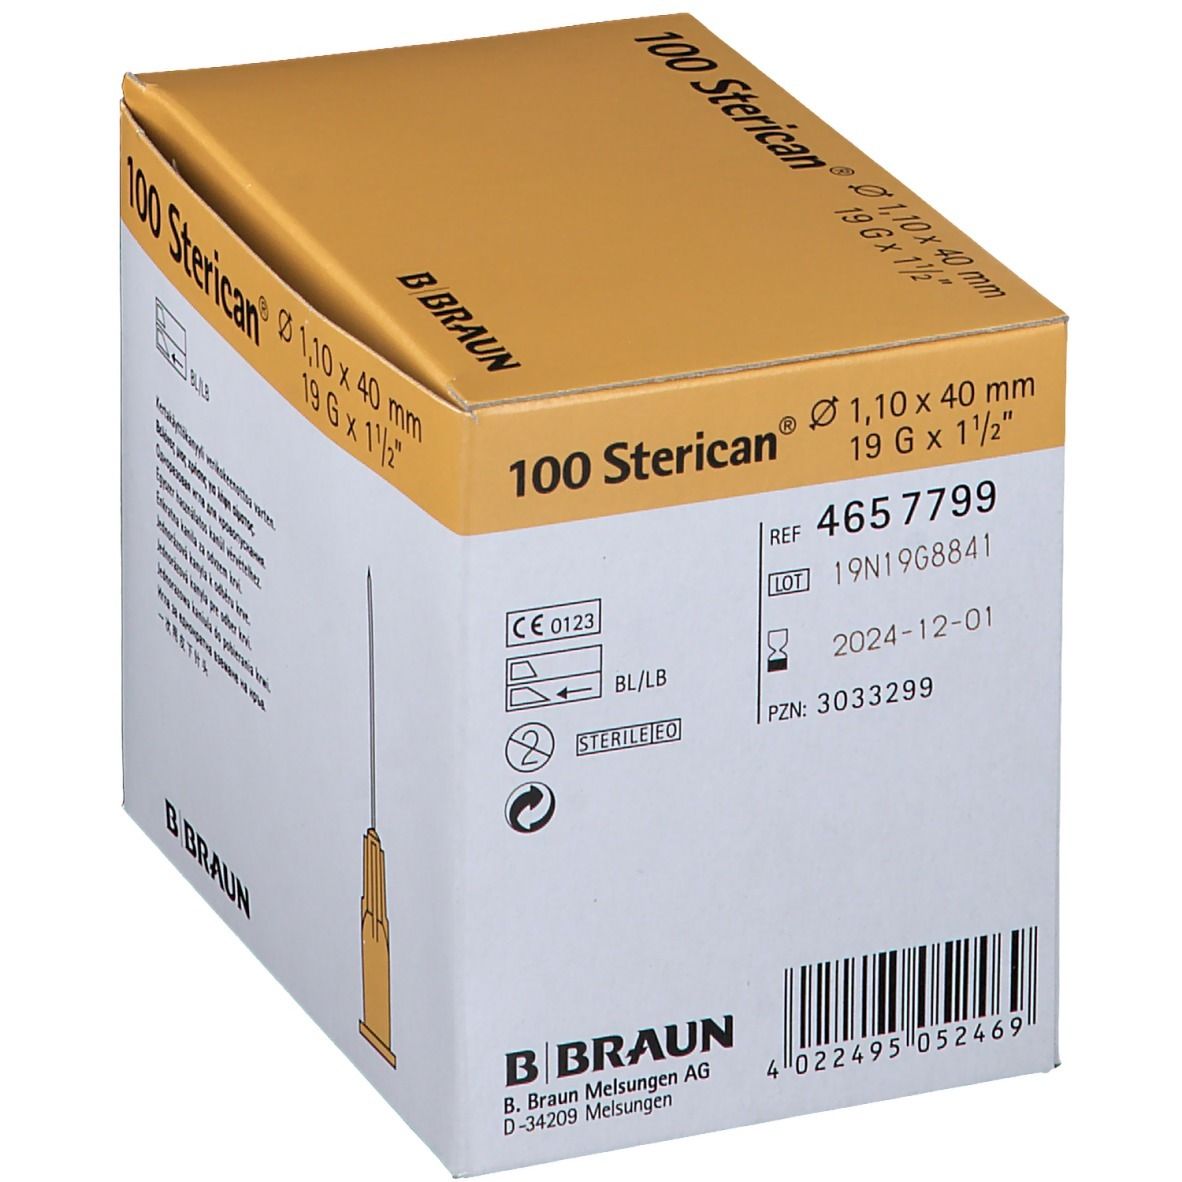 Sterican® zur Blutentnahme G 19 x 1 1/2 1,10 x 40 mm